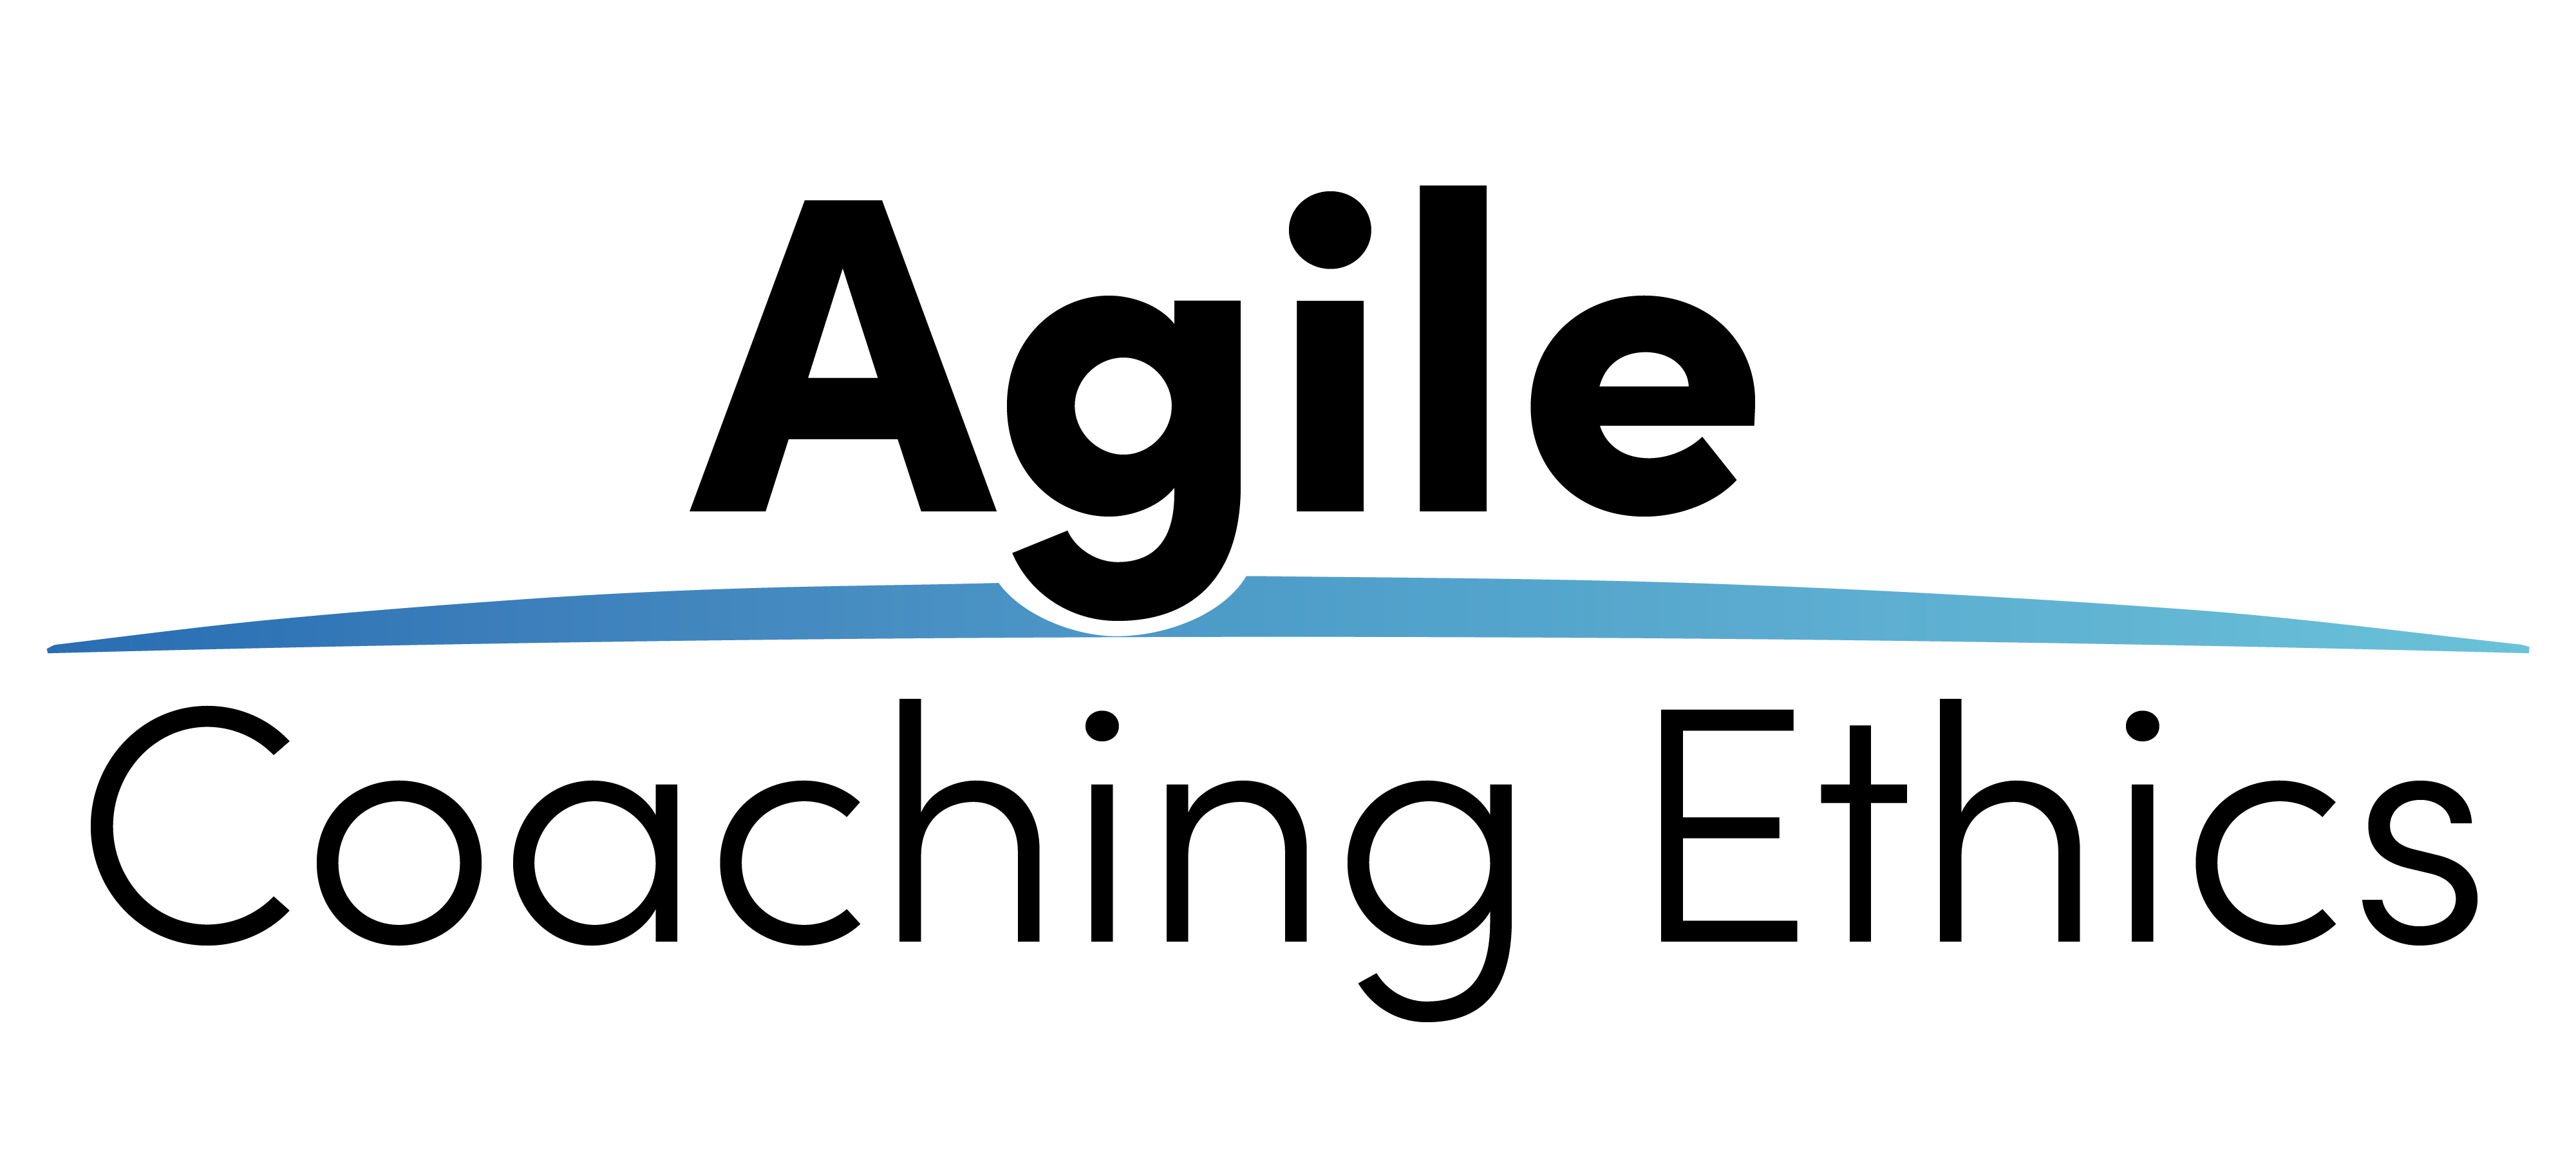 Agile Coaching Ethics Logo